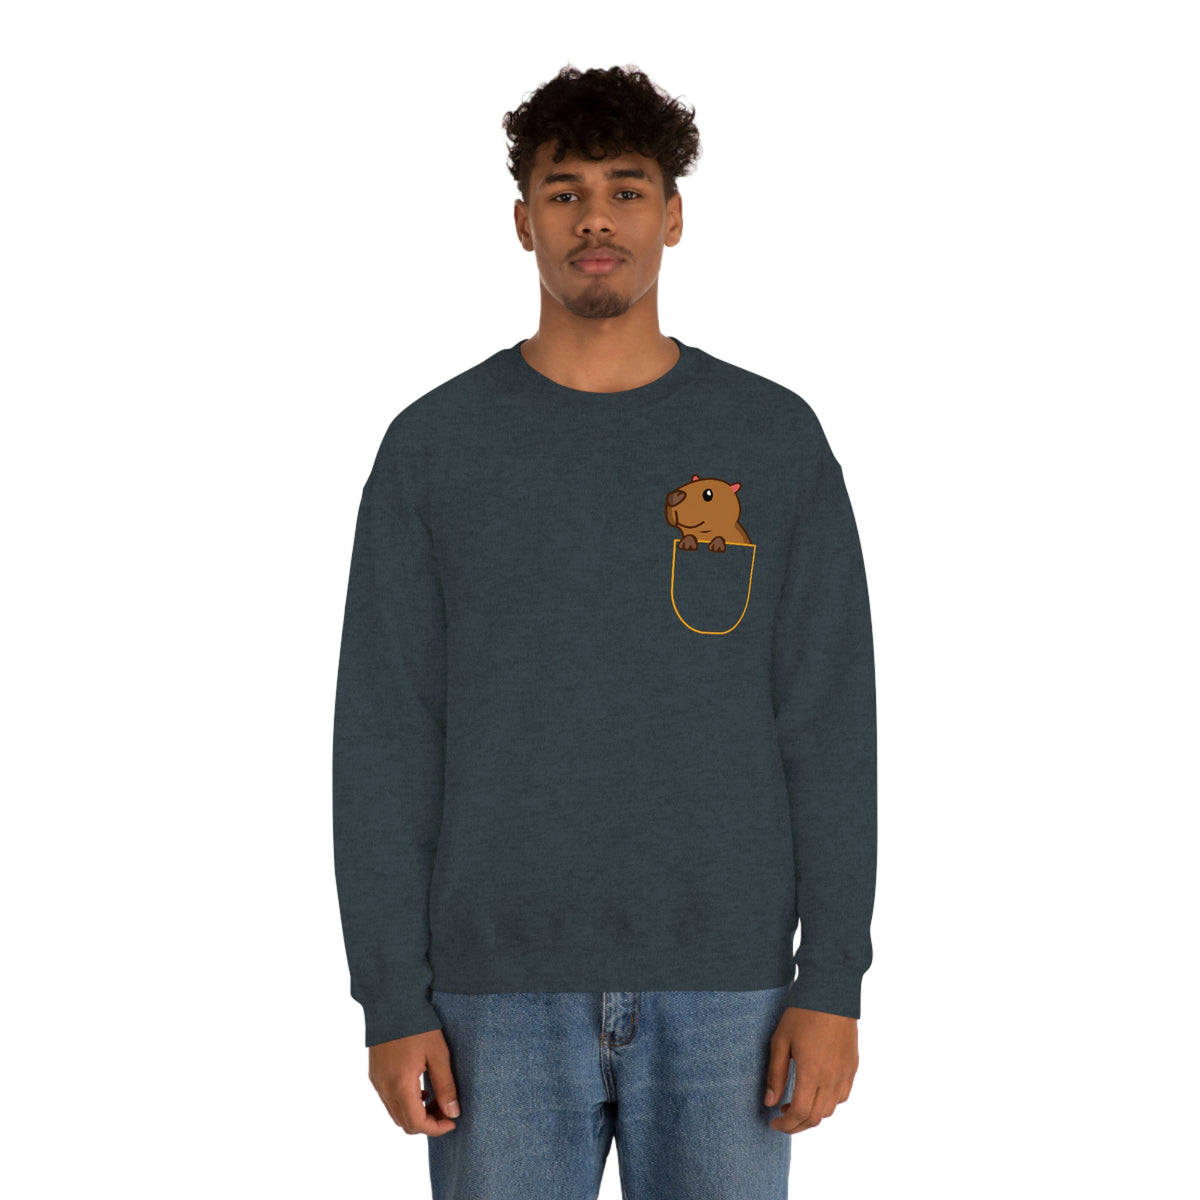 Capy on Pocket - Unisex Sweatshirt